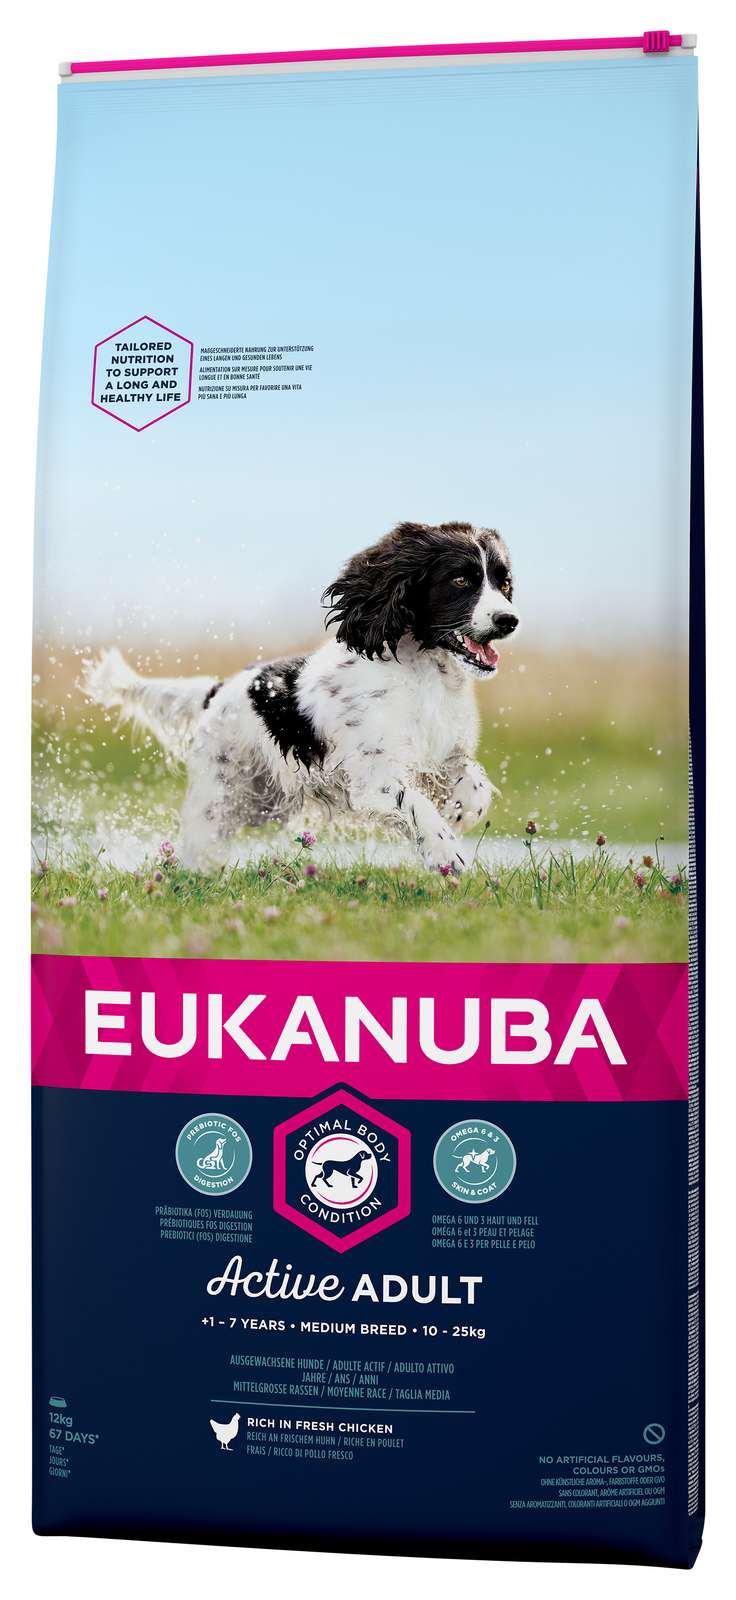 Billede af Eldorado - Eukanuba adult medium Kylling & Ris 12kg - Dog Food hos Petpower.dk